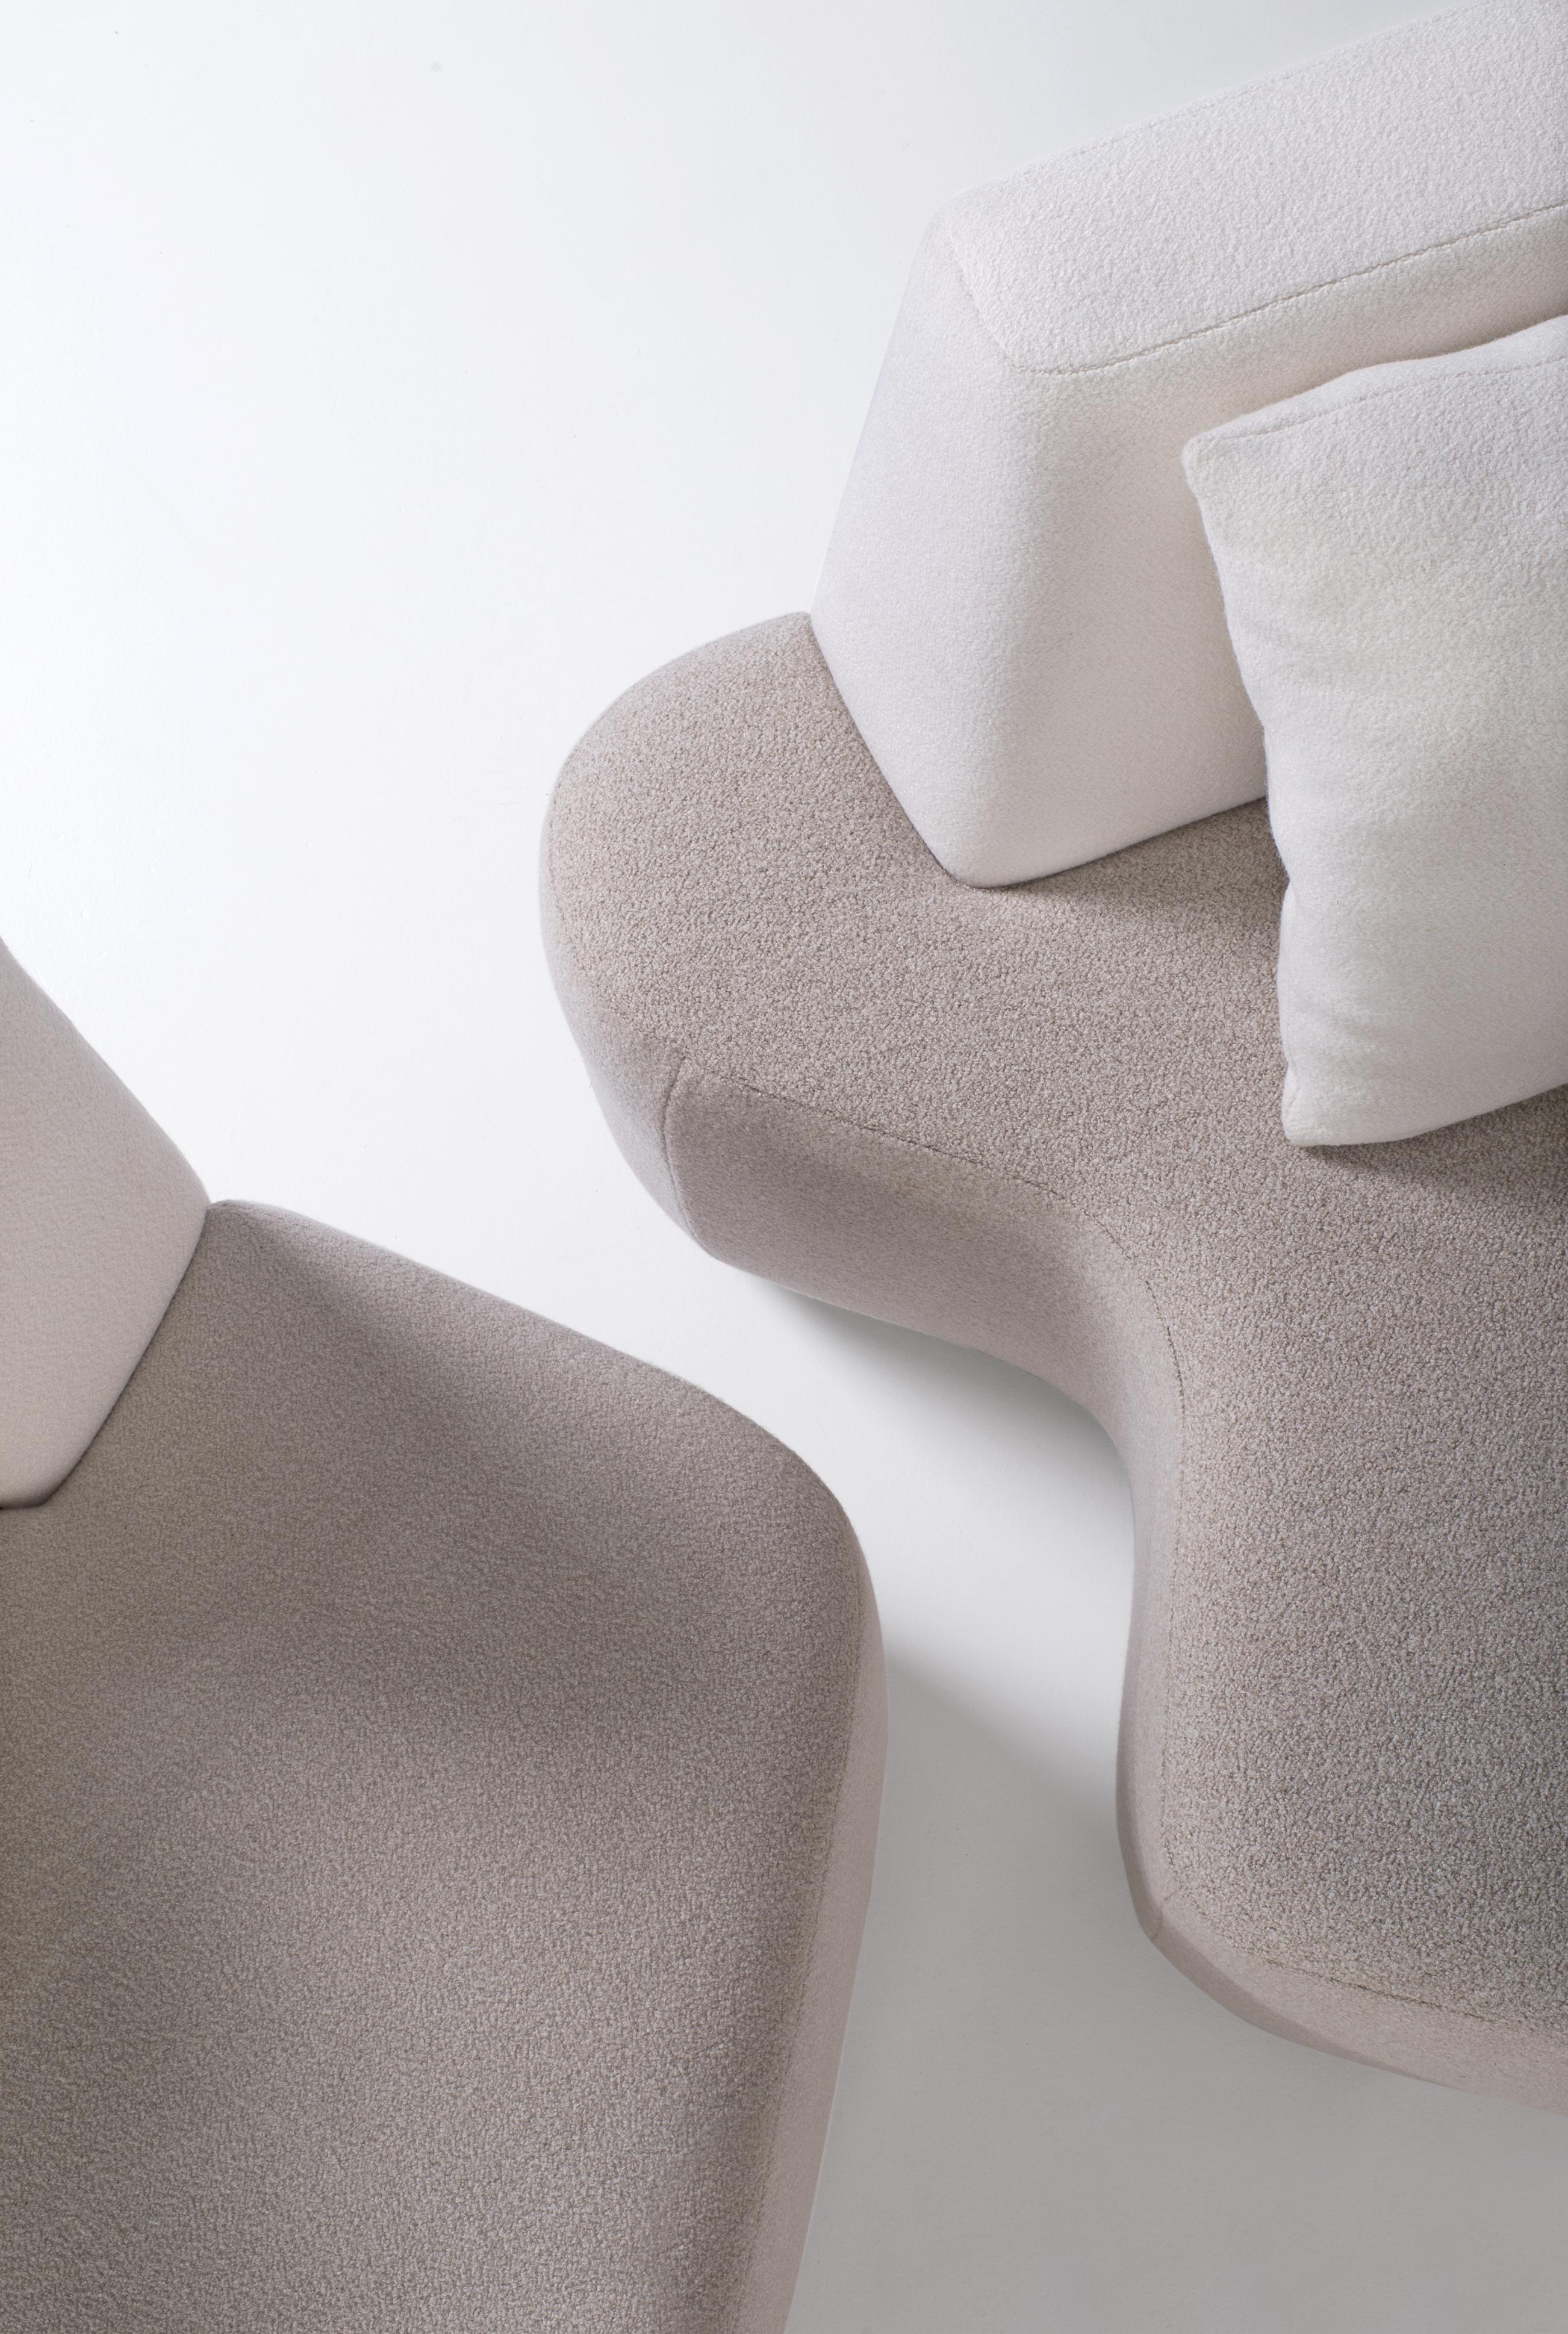 French Handmad Organic Sofa in White Cream Wool 2 Modules by Eric Gizard in stock